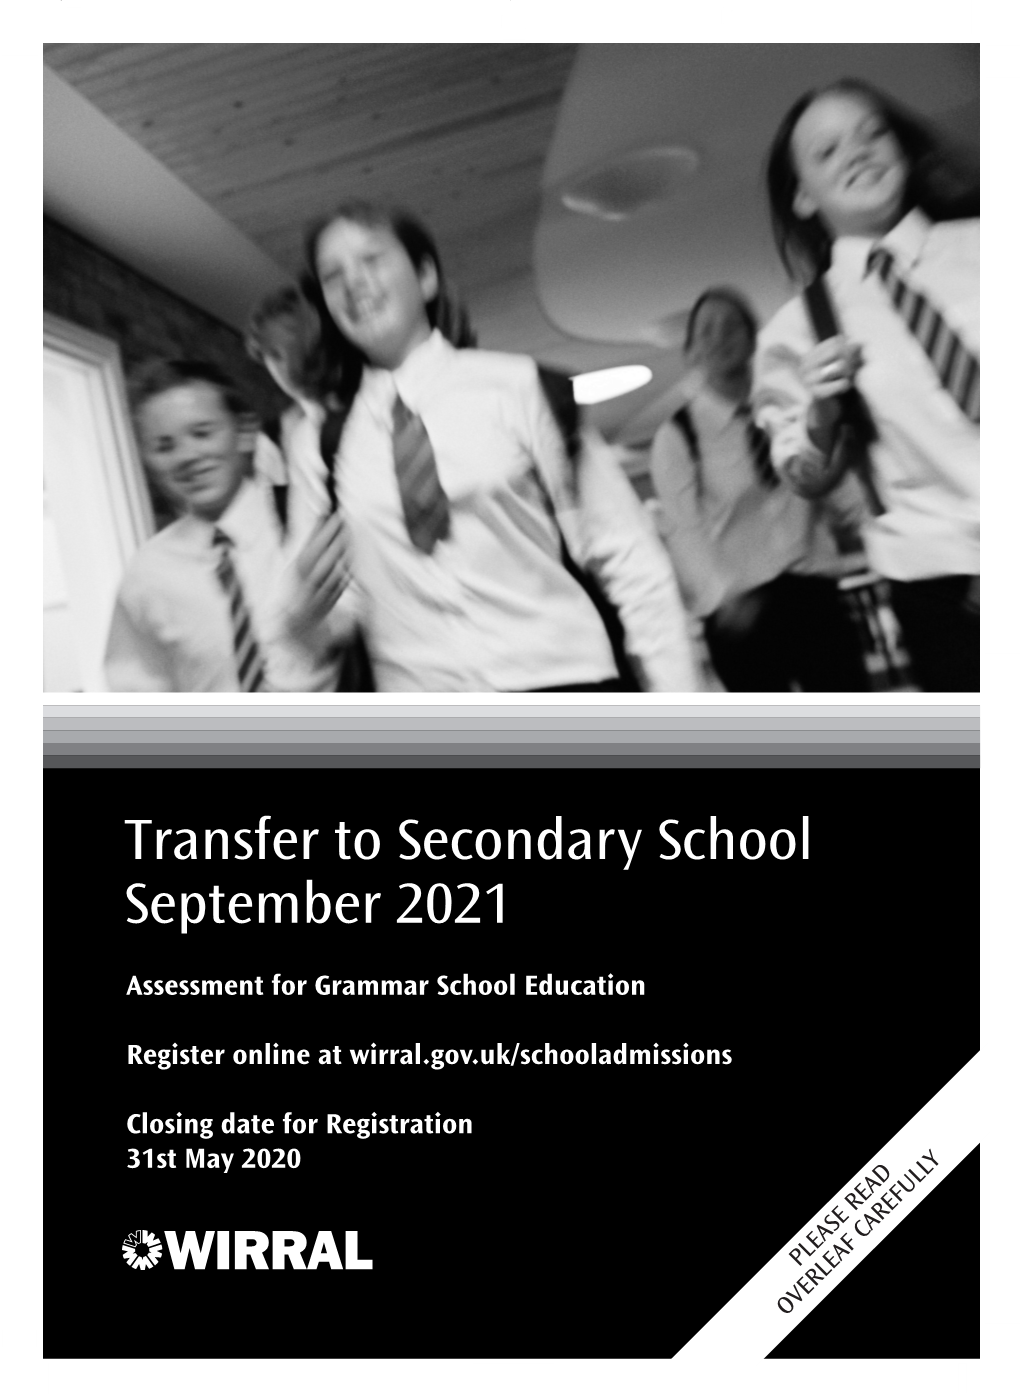 Transfer to Secondary School September 2021